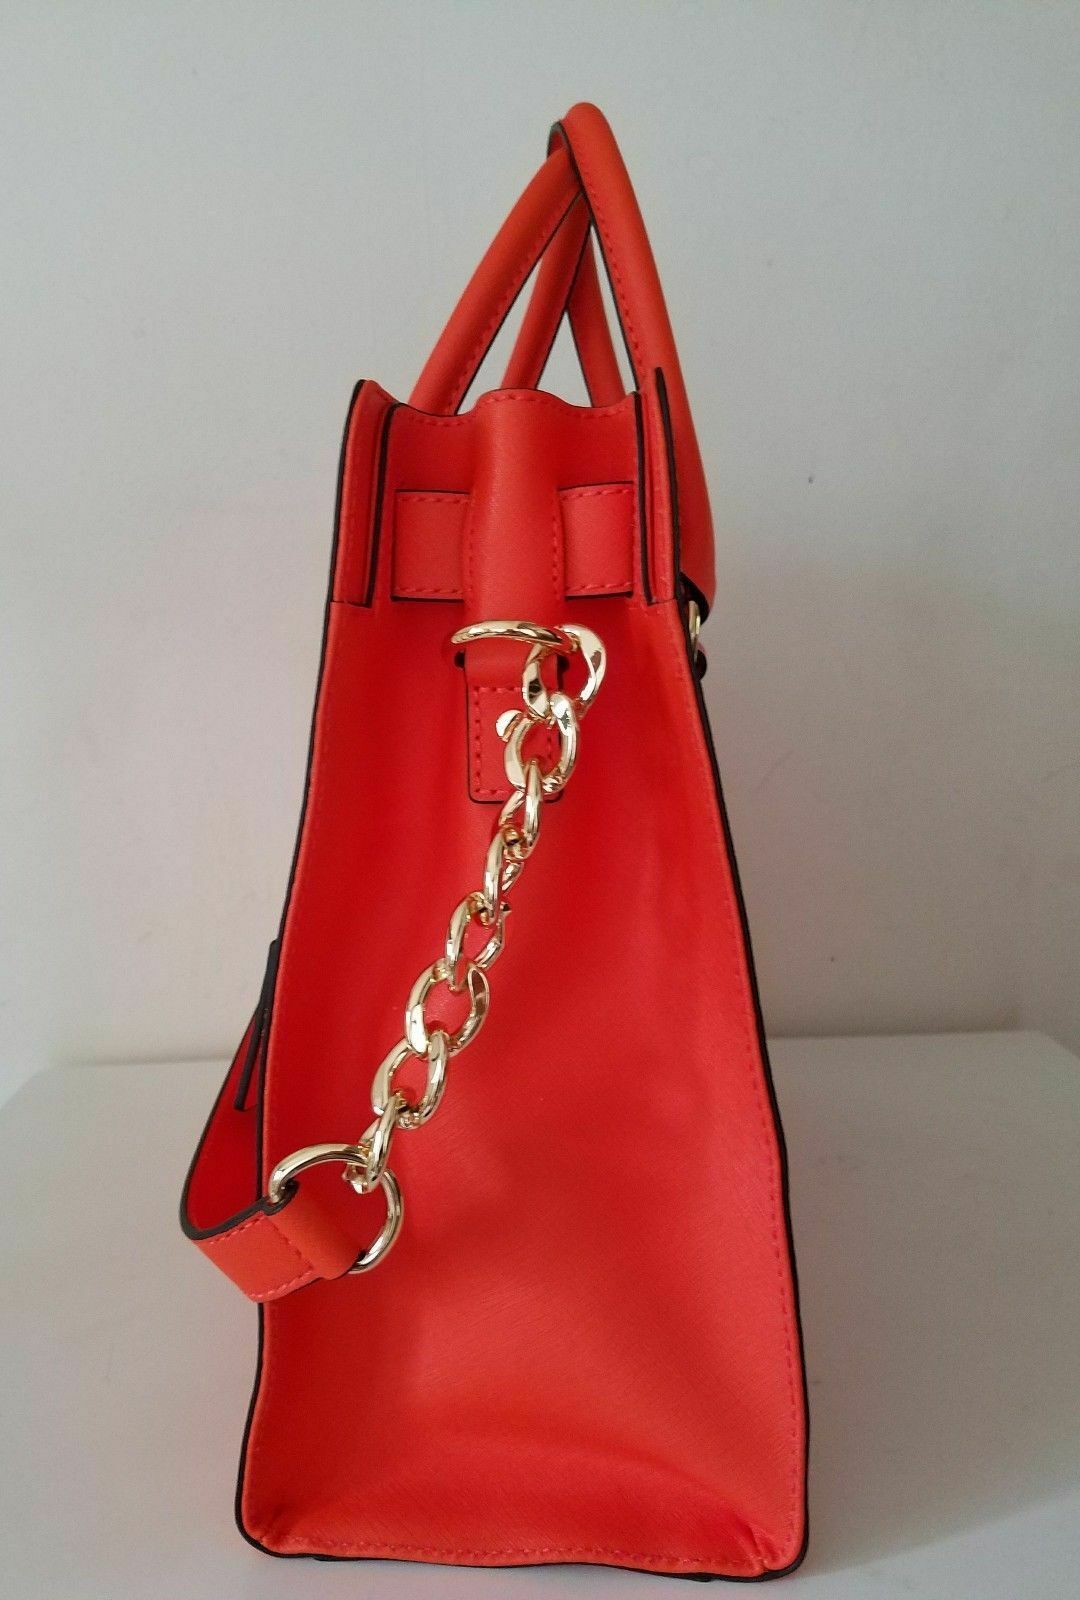 Michael+Kors+Selma+Medium+Satchel+Leather+Tote+Bag+Purse+Handbag+Mandarin  for sale online